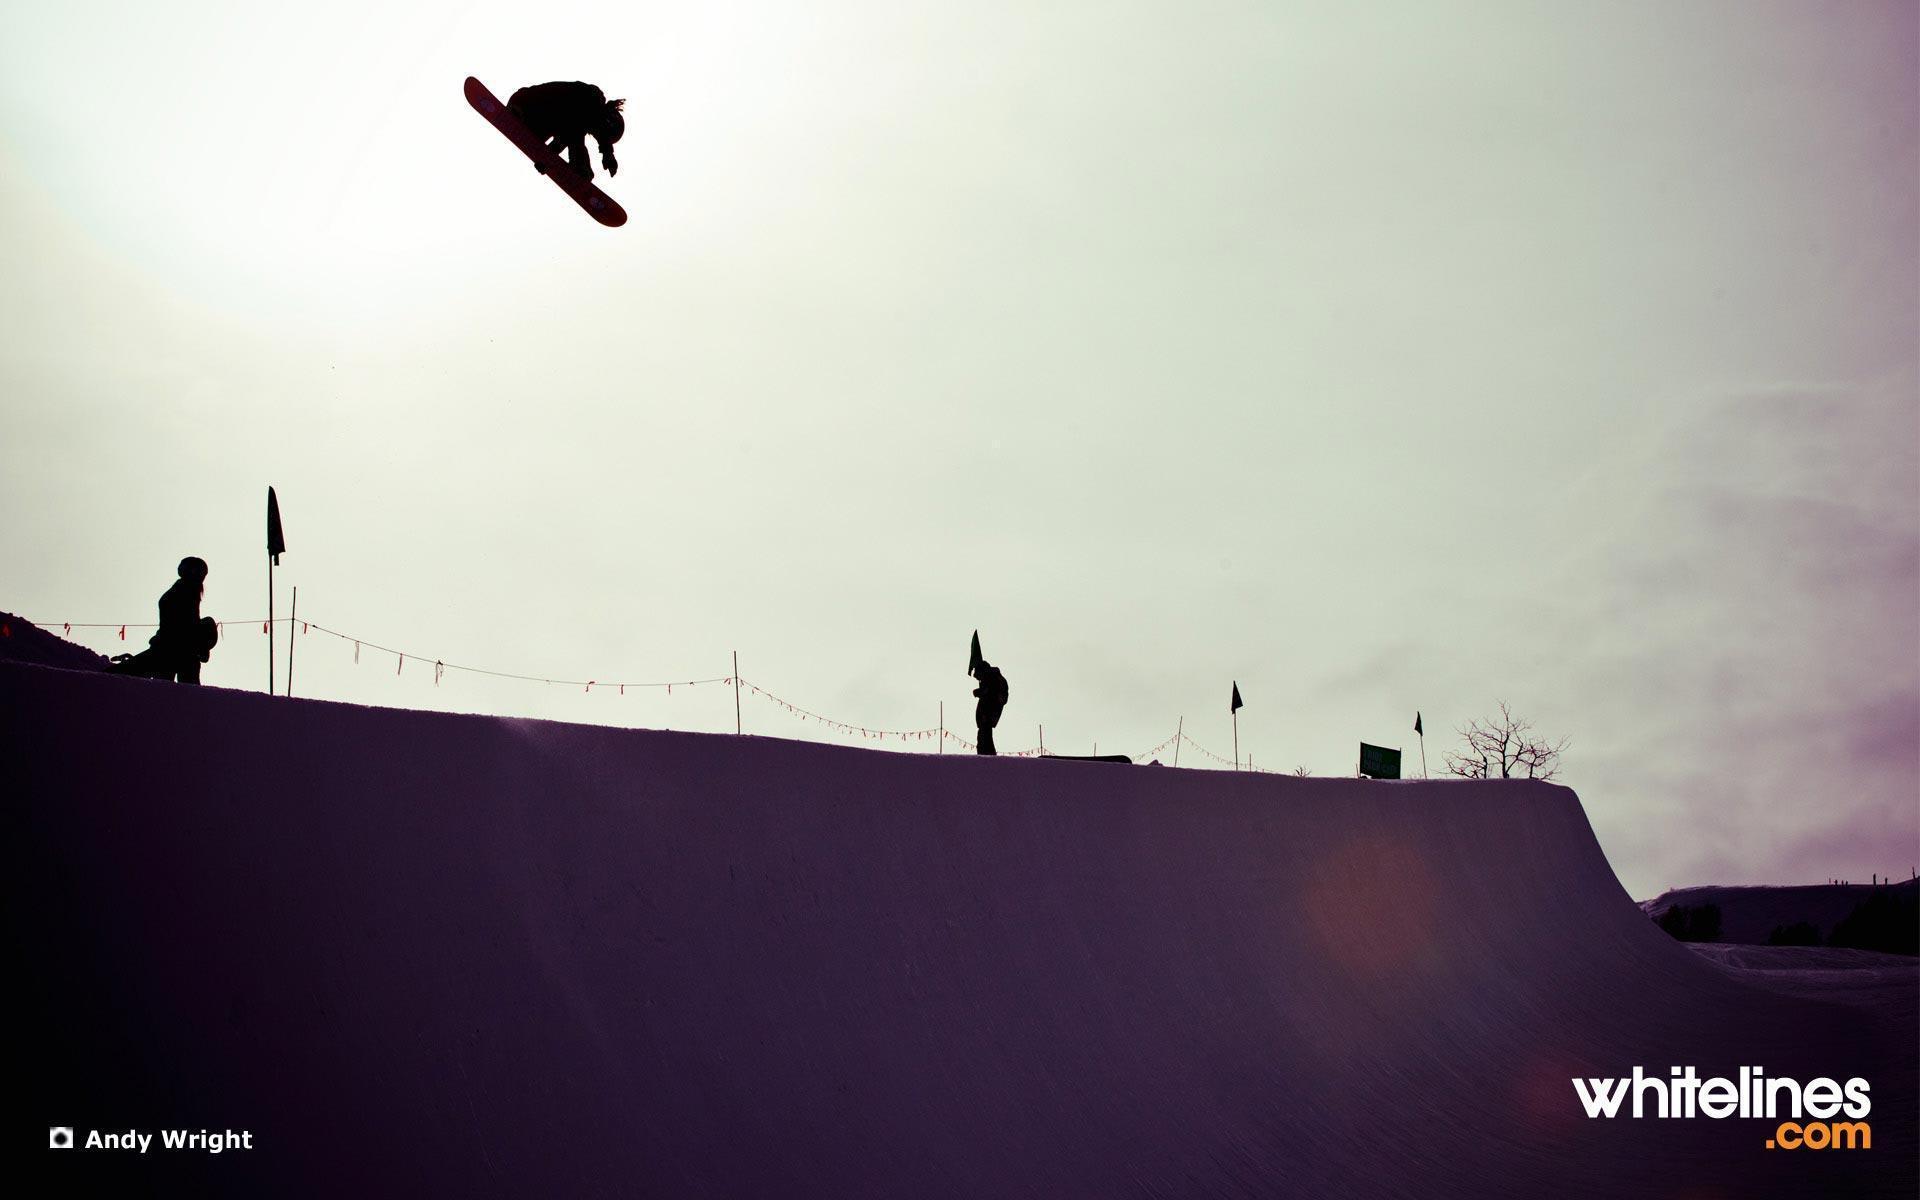 Shaun White Snowboarding Wallpaper